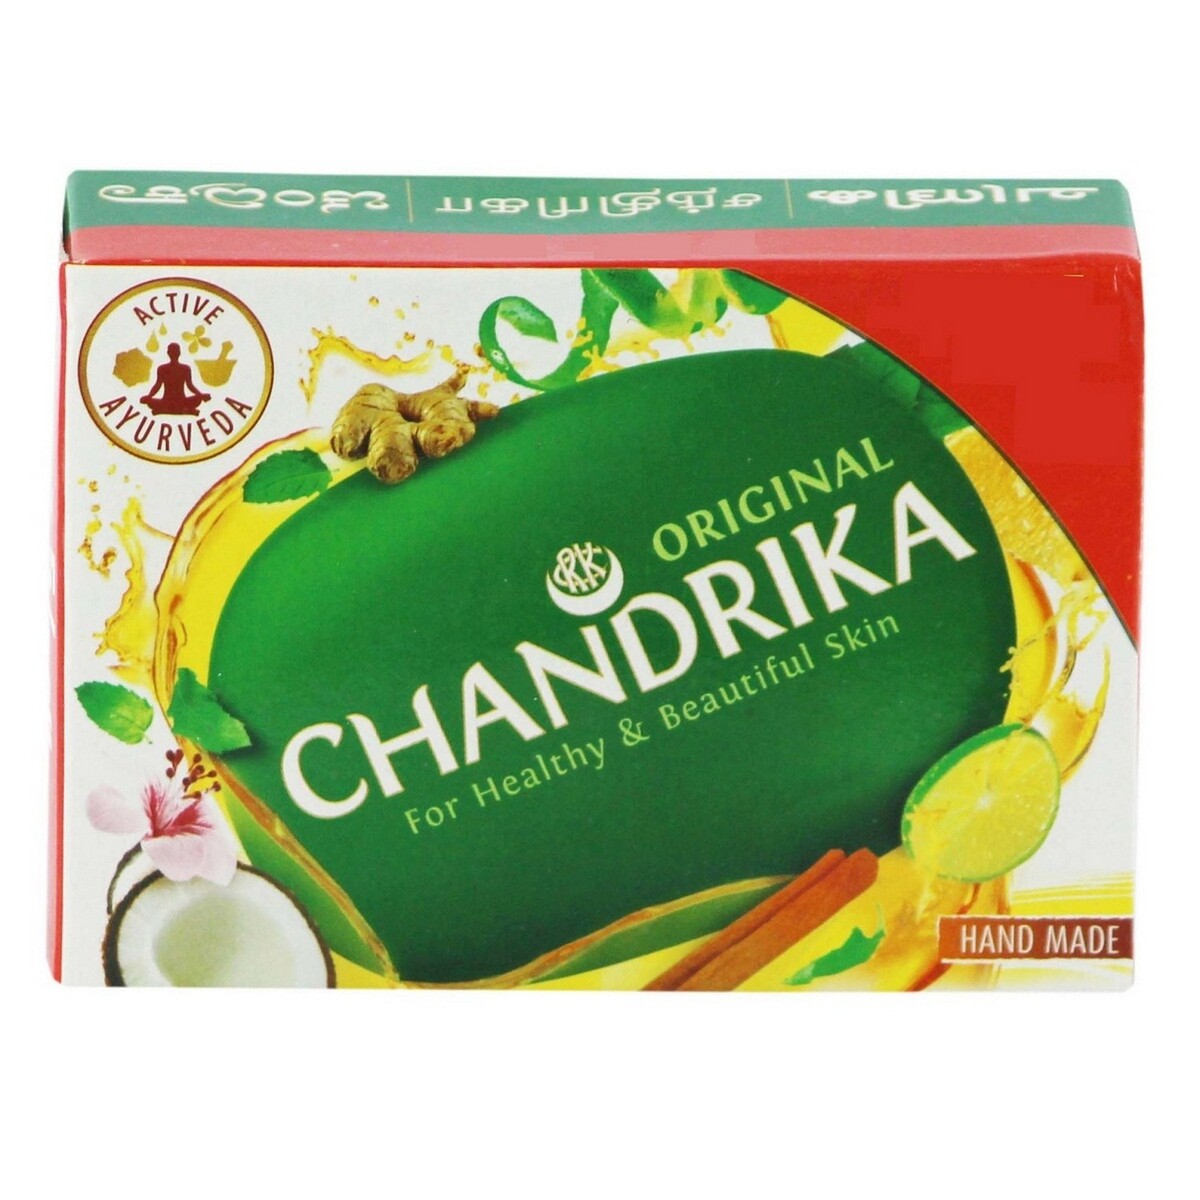 Chandrika Soap Original 75g